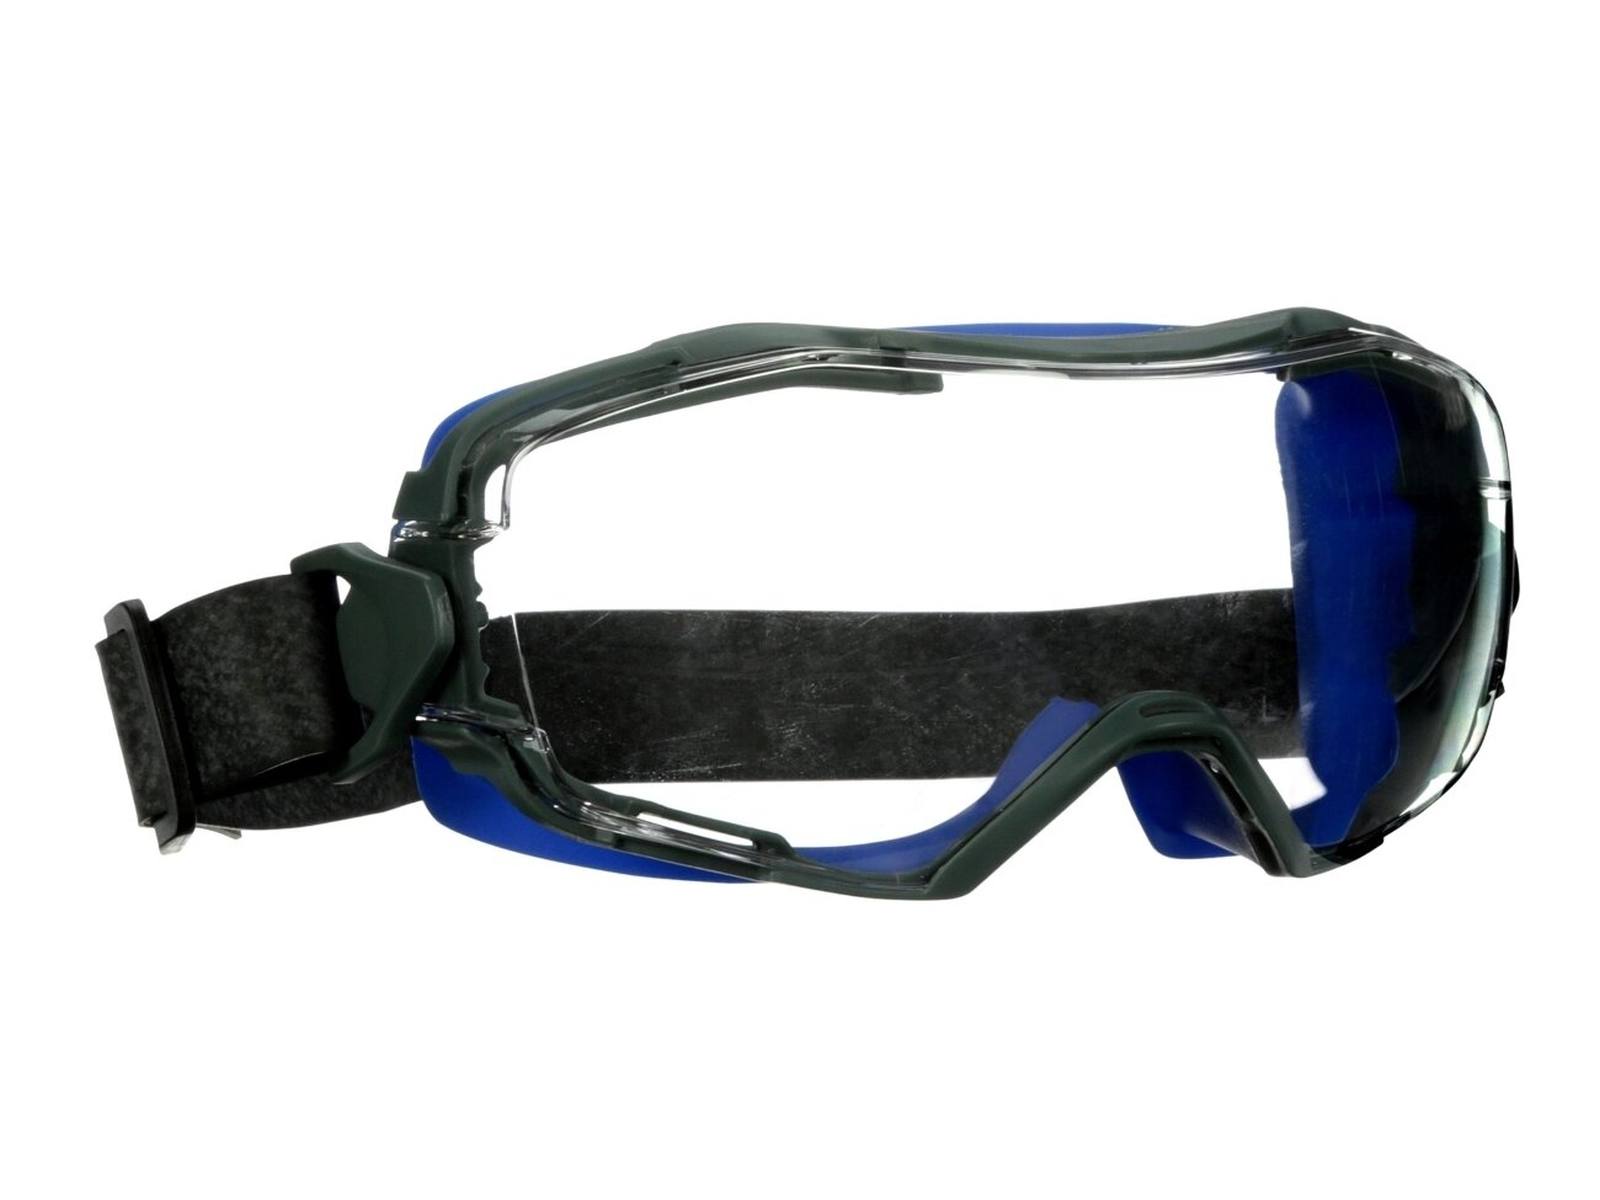 3M Gafas de visión total GoggleGear 6000, montura azul, correa de neopreno, revestimiento antivaho/antirayaduras Scotchgard (K&amp;N), lente transparente, GG6001NSGAF-BLU-EU